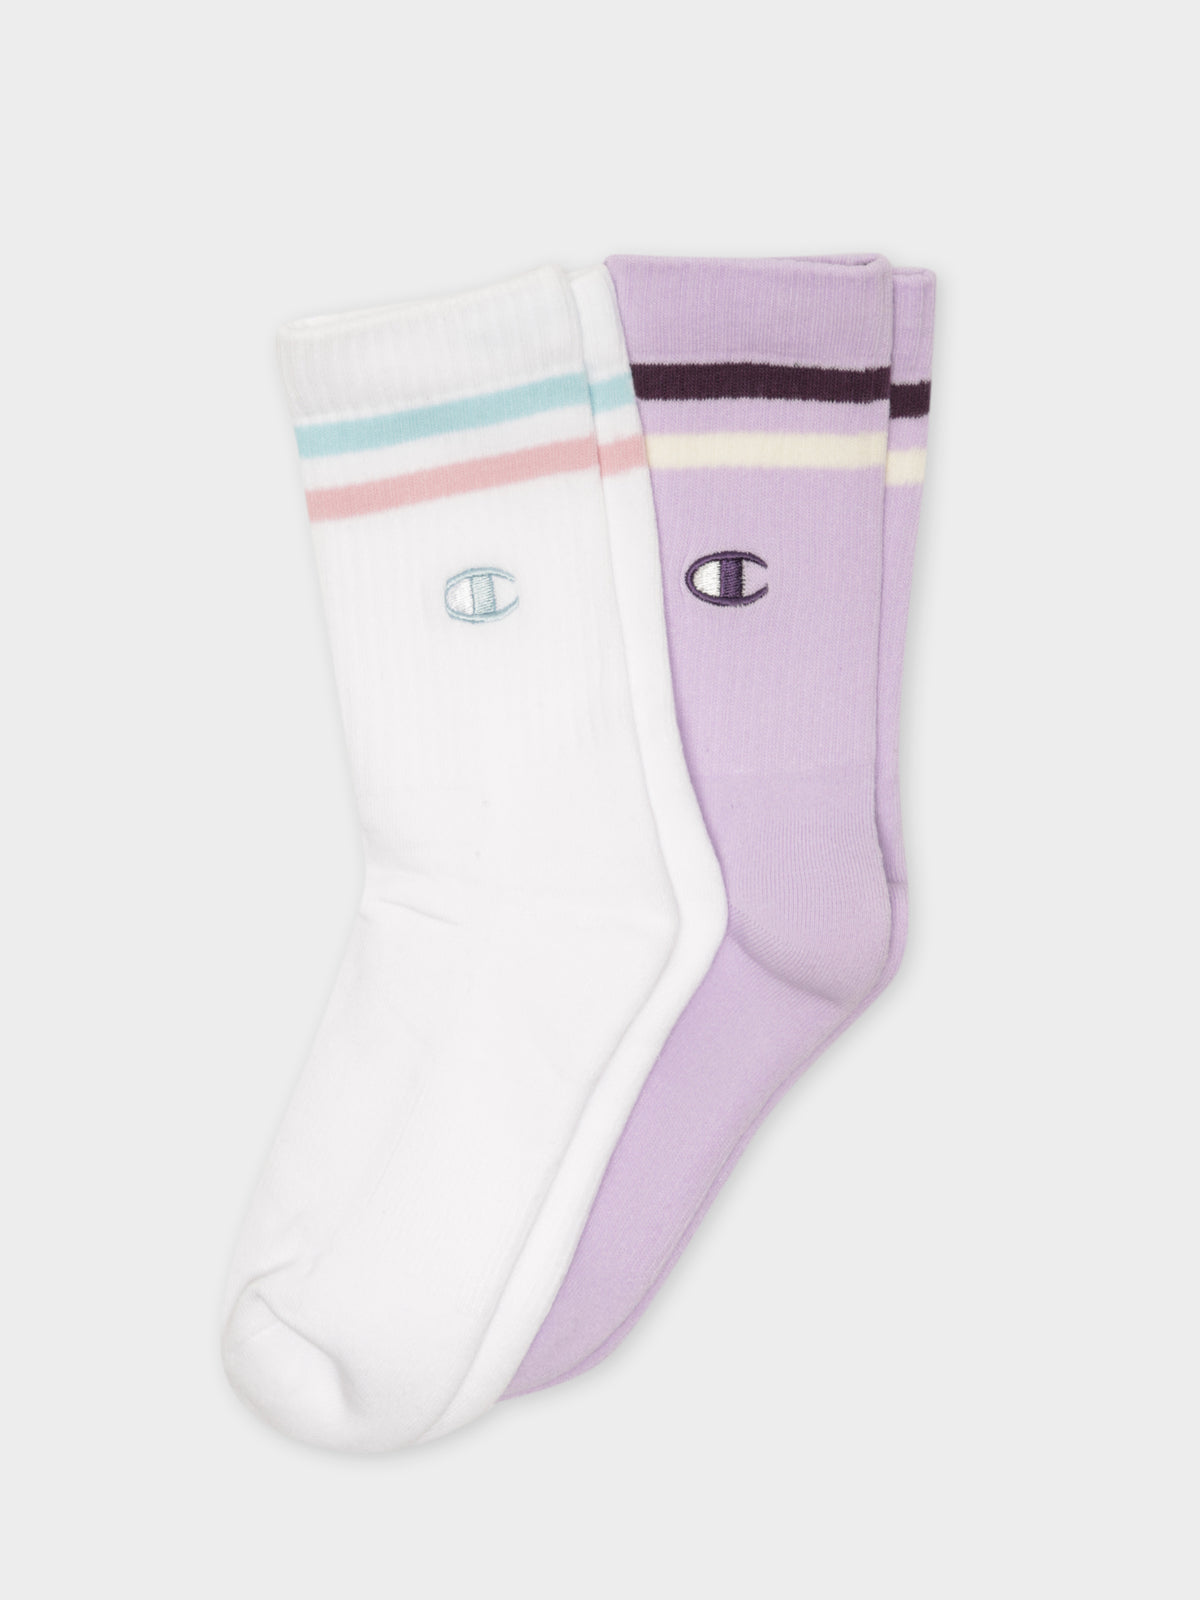 2 Pairs of Branded Crew Socks in White &amp; Purple